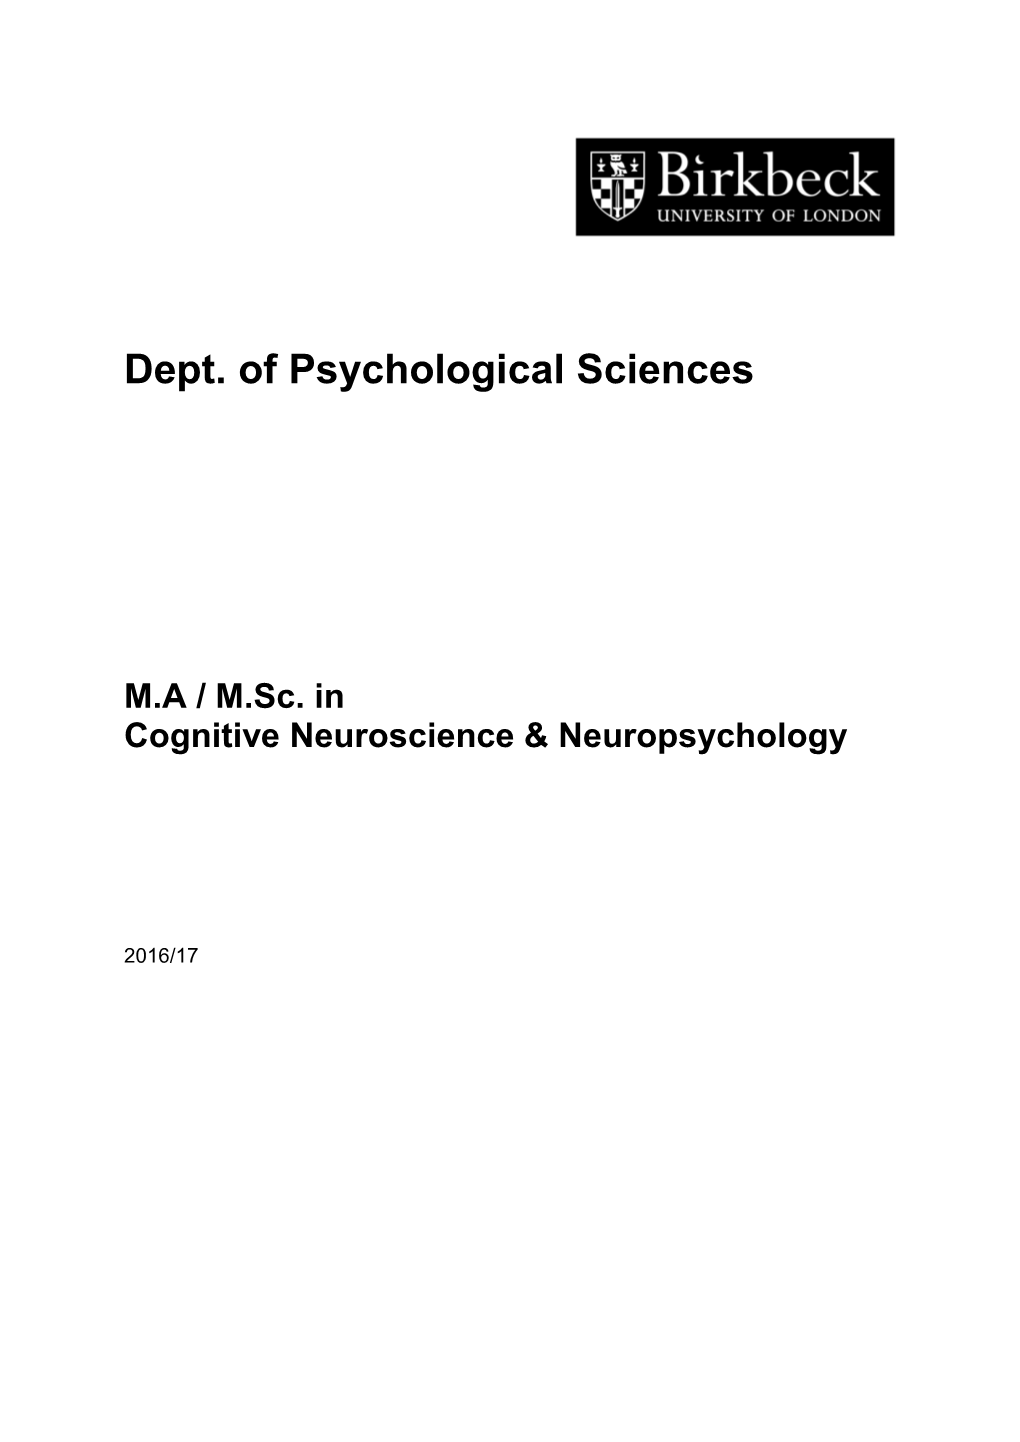 Dept. of Psychological Sciences MA / M.Sc. in Cognitive Neuroscience